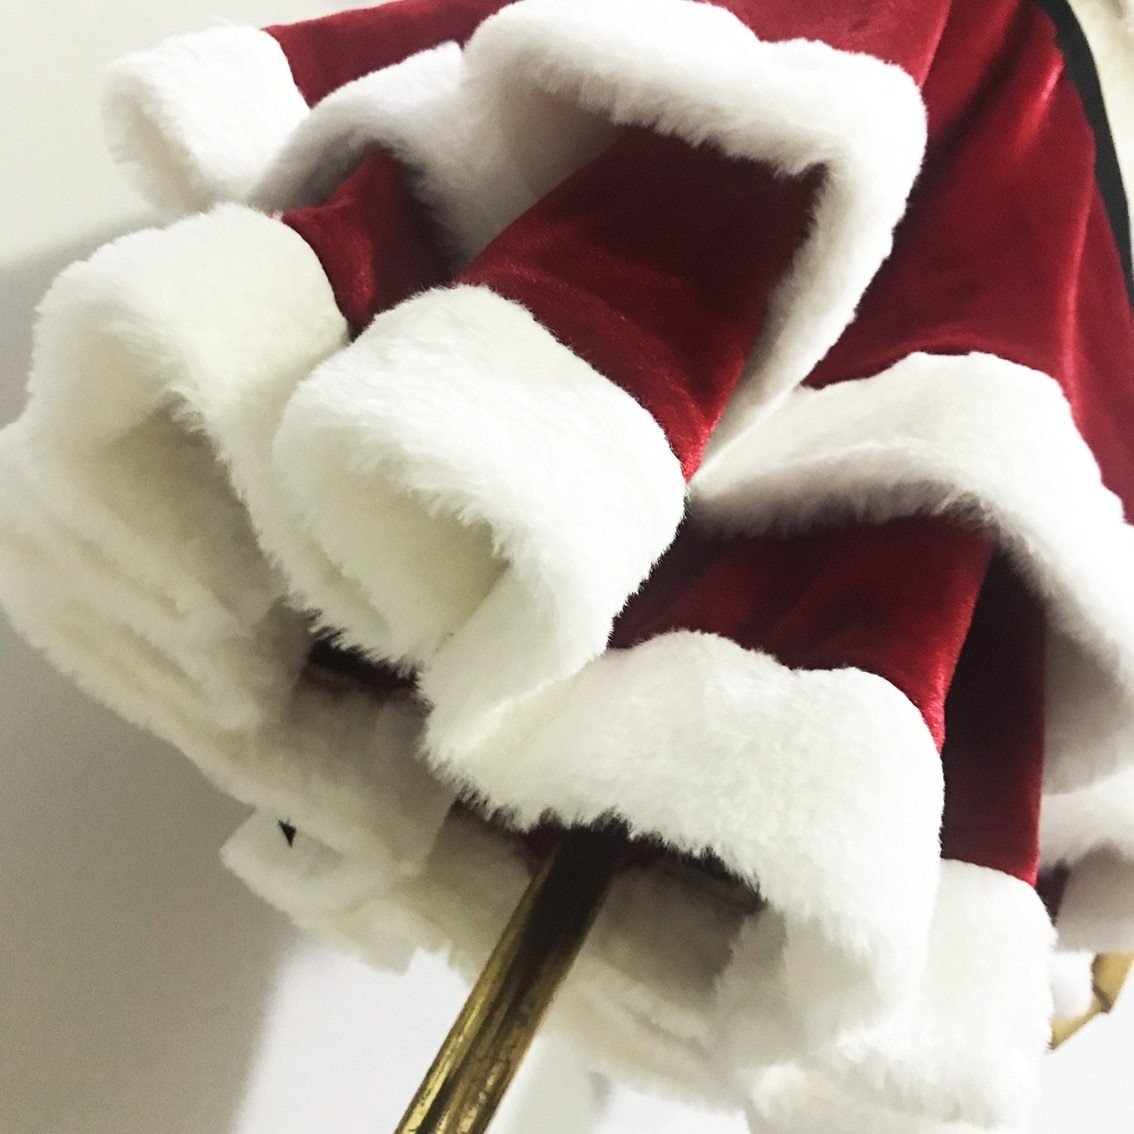 Lace Up Santa Dress + Costume 